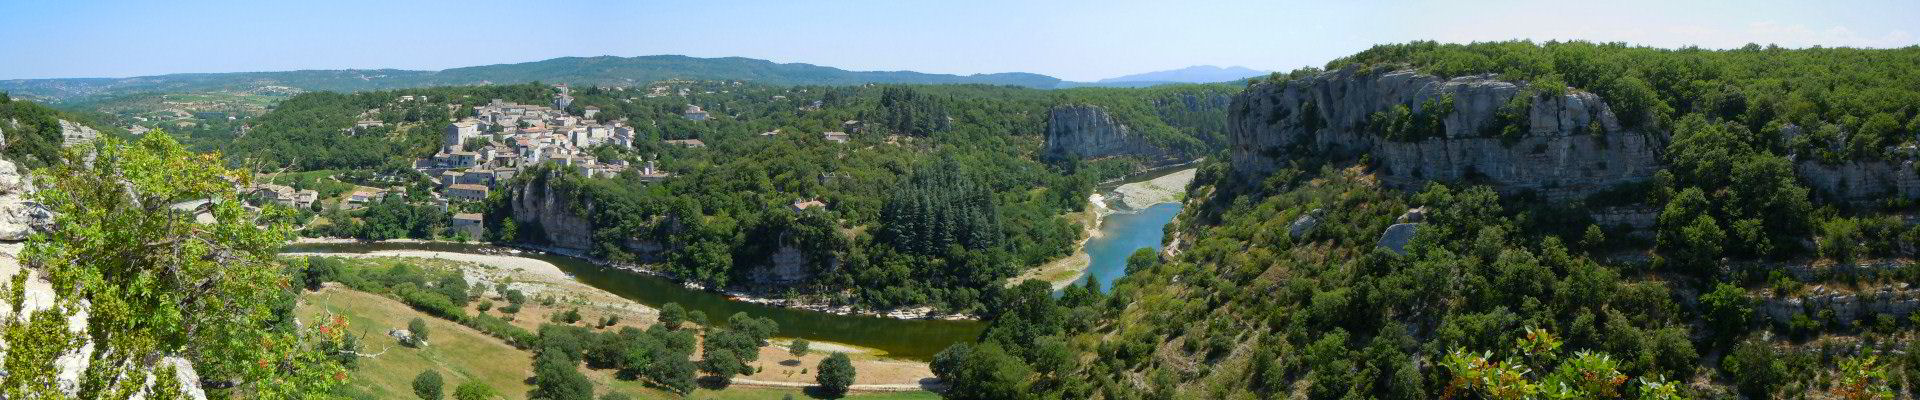 Vue panoramique de Balazuc en Ardèche